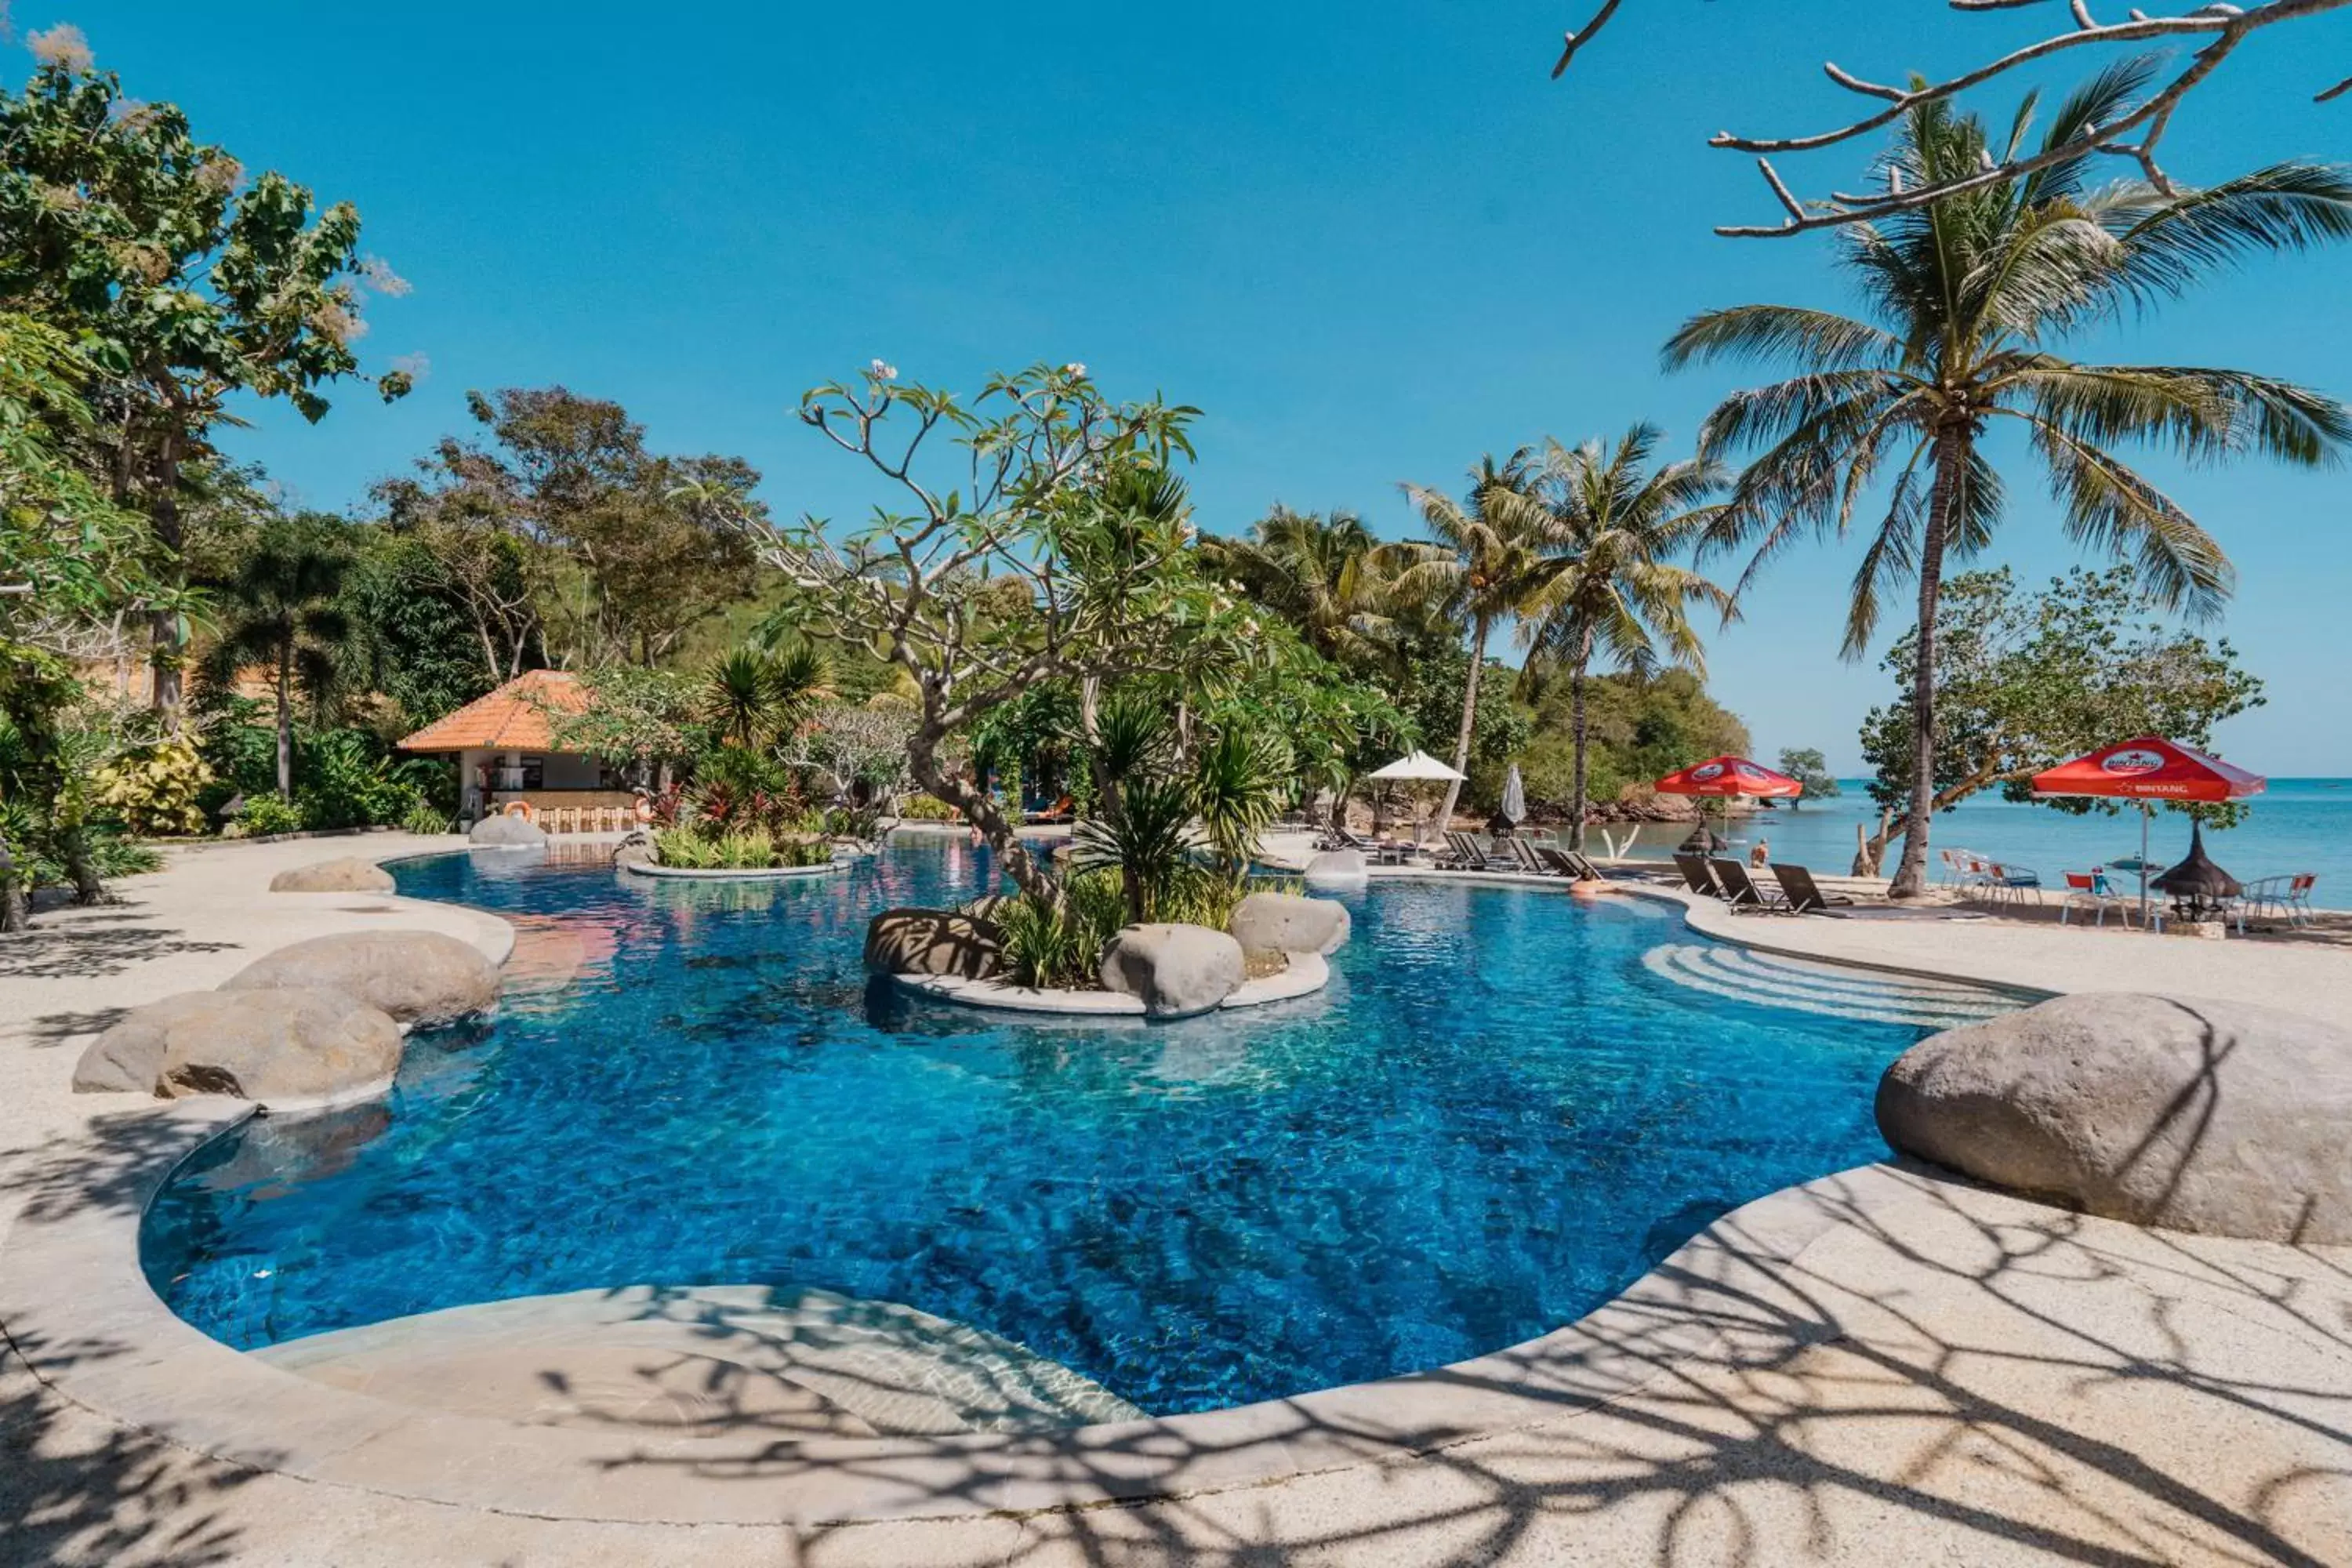 Swimming Pool in Bintang Flores Hotel